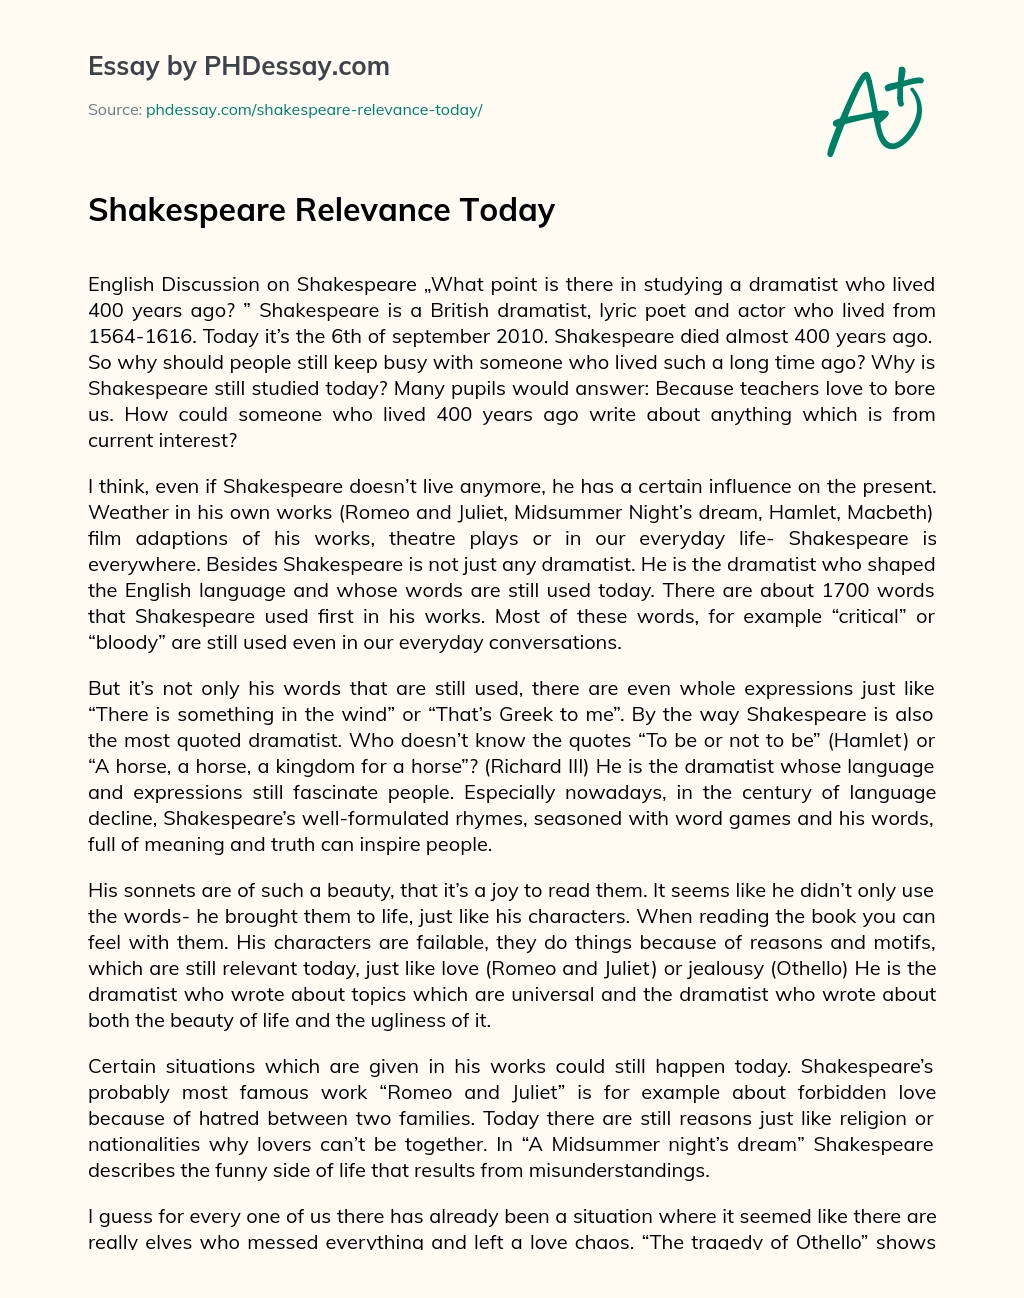 write my esl college essay on shakespeare